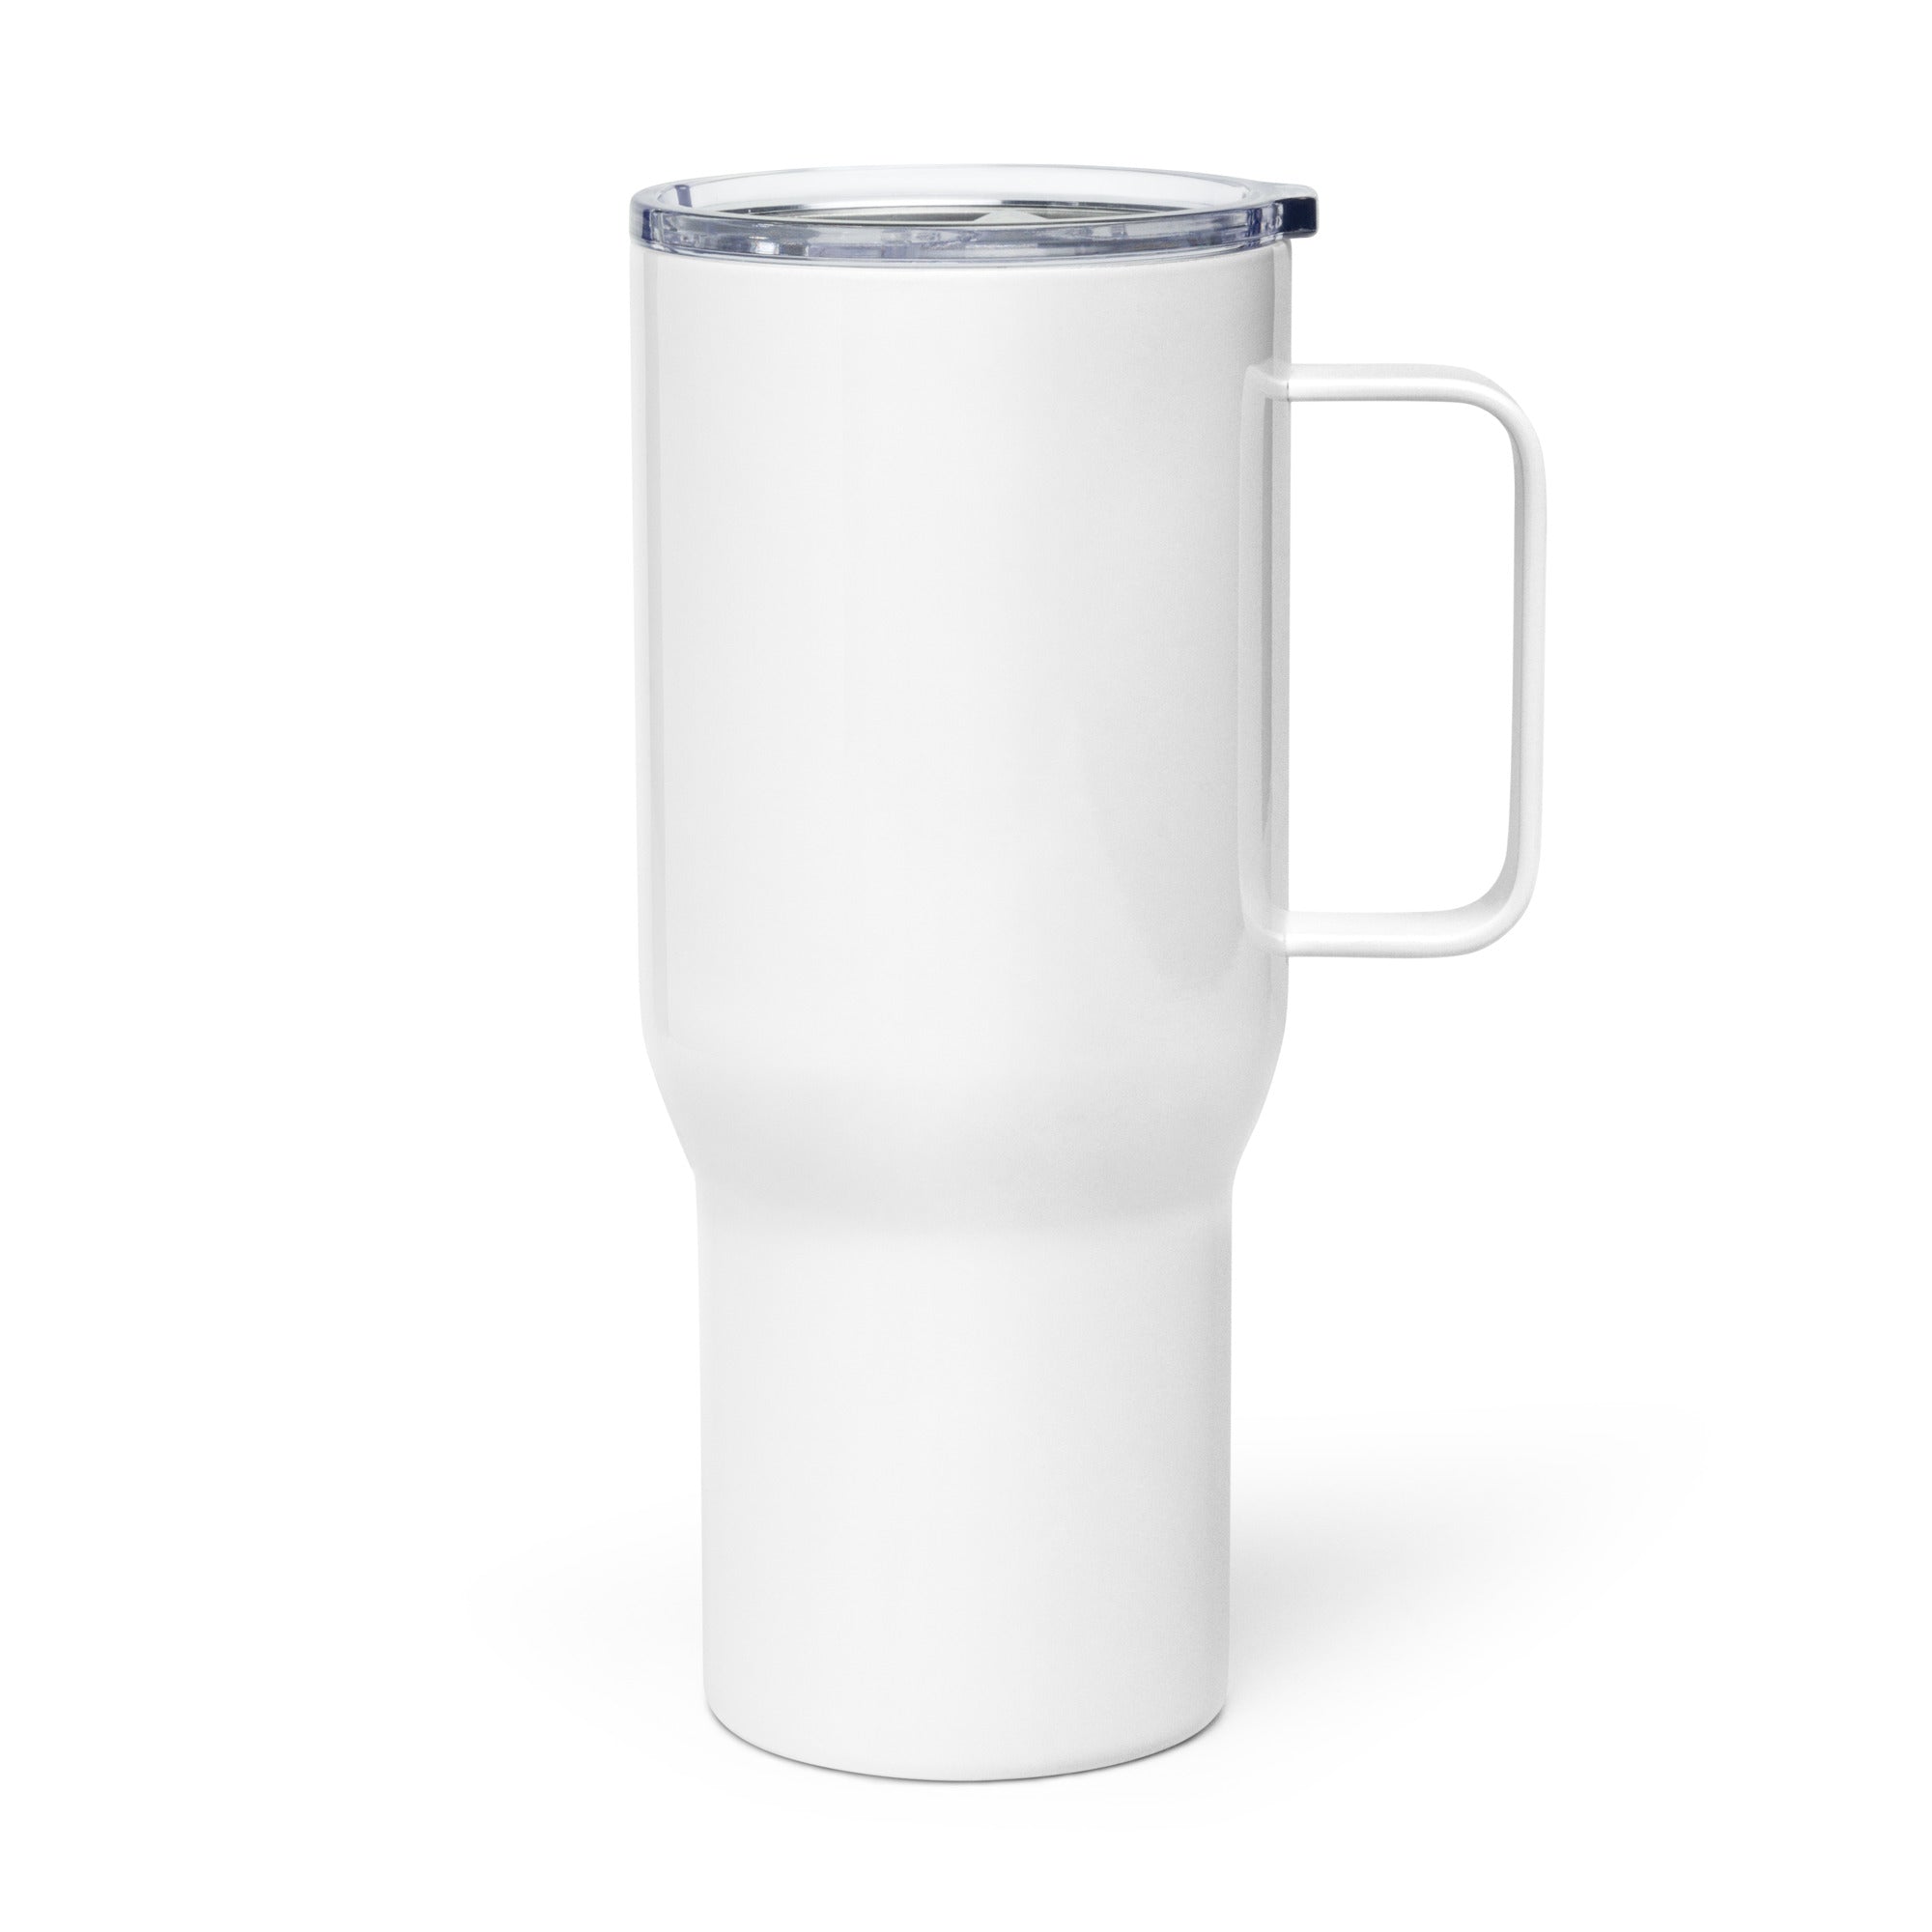 UT Travel mug with a handle